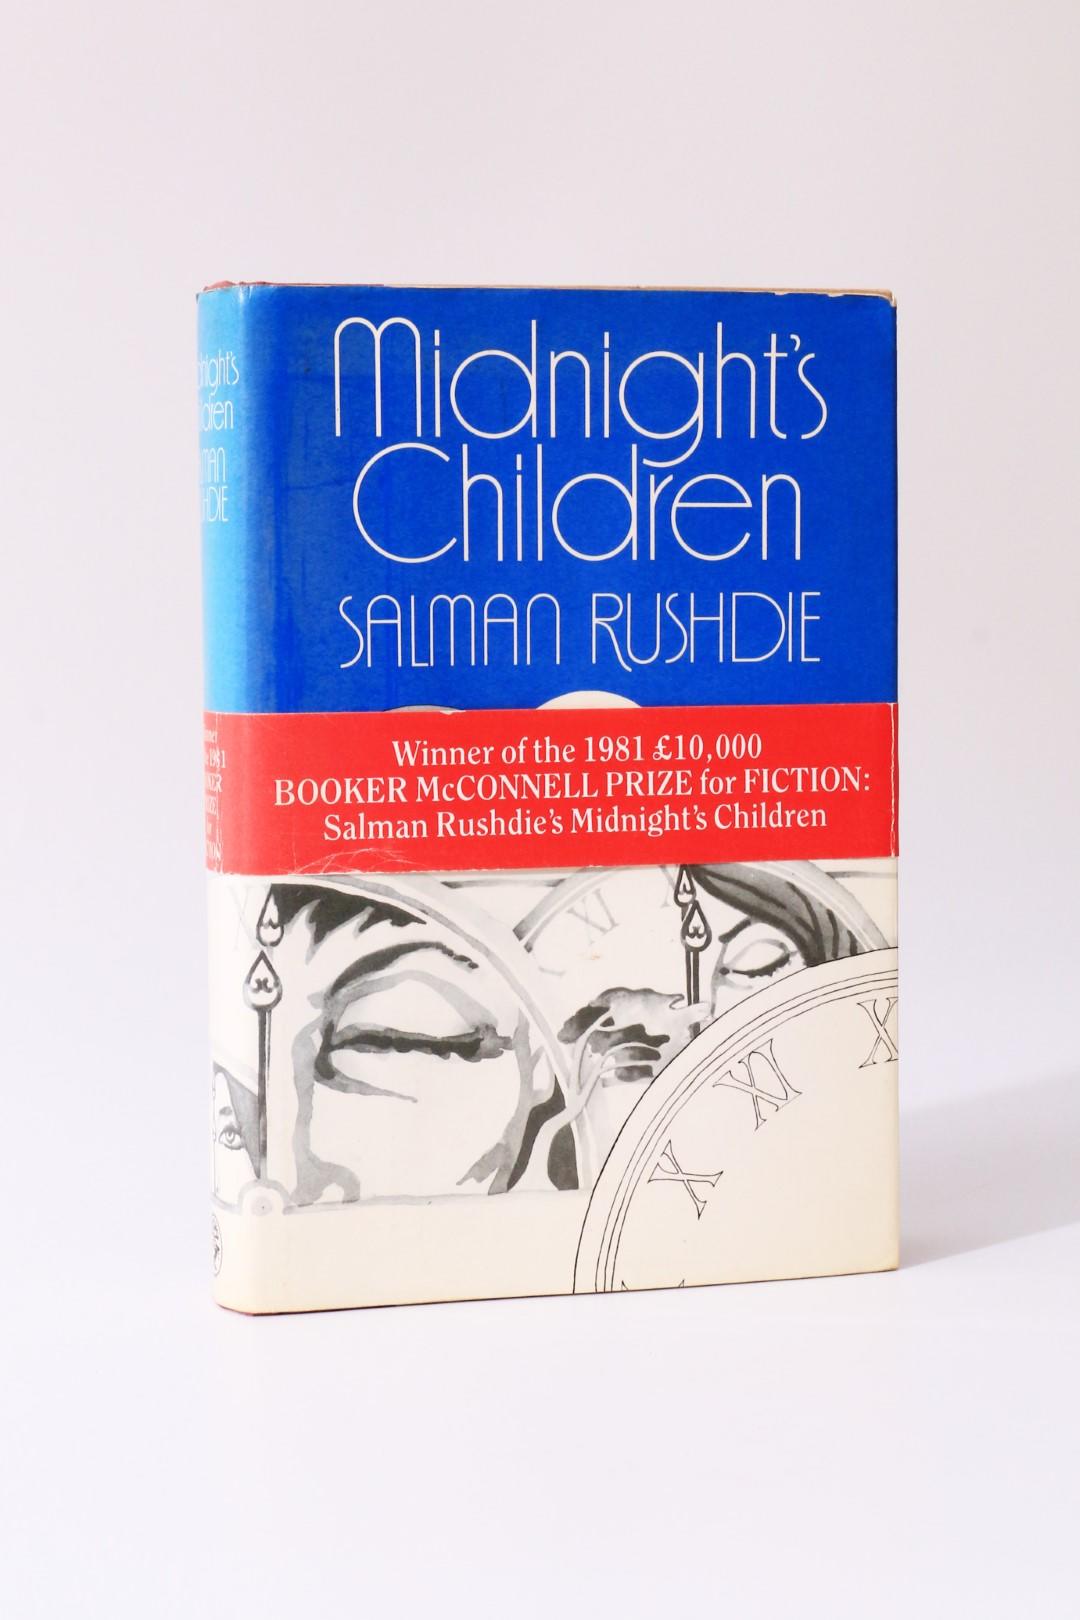 Salman Rushdie - Midnight's Children - Jonathan Cape, 1981, First Edition.